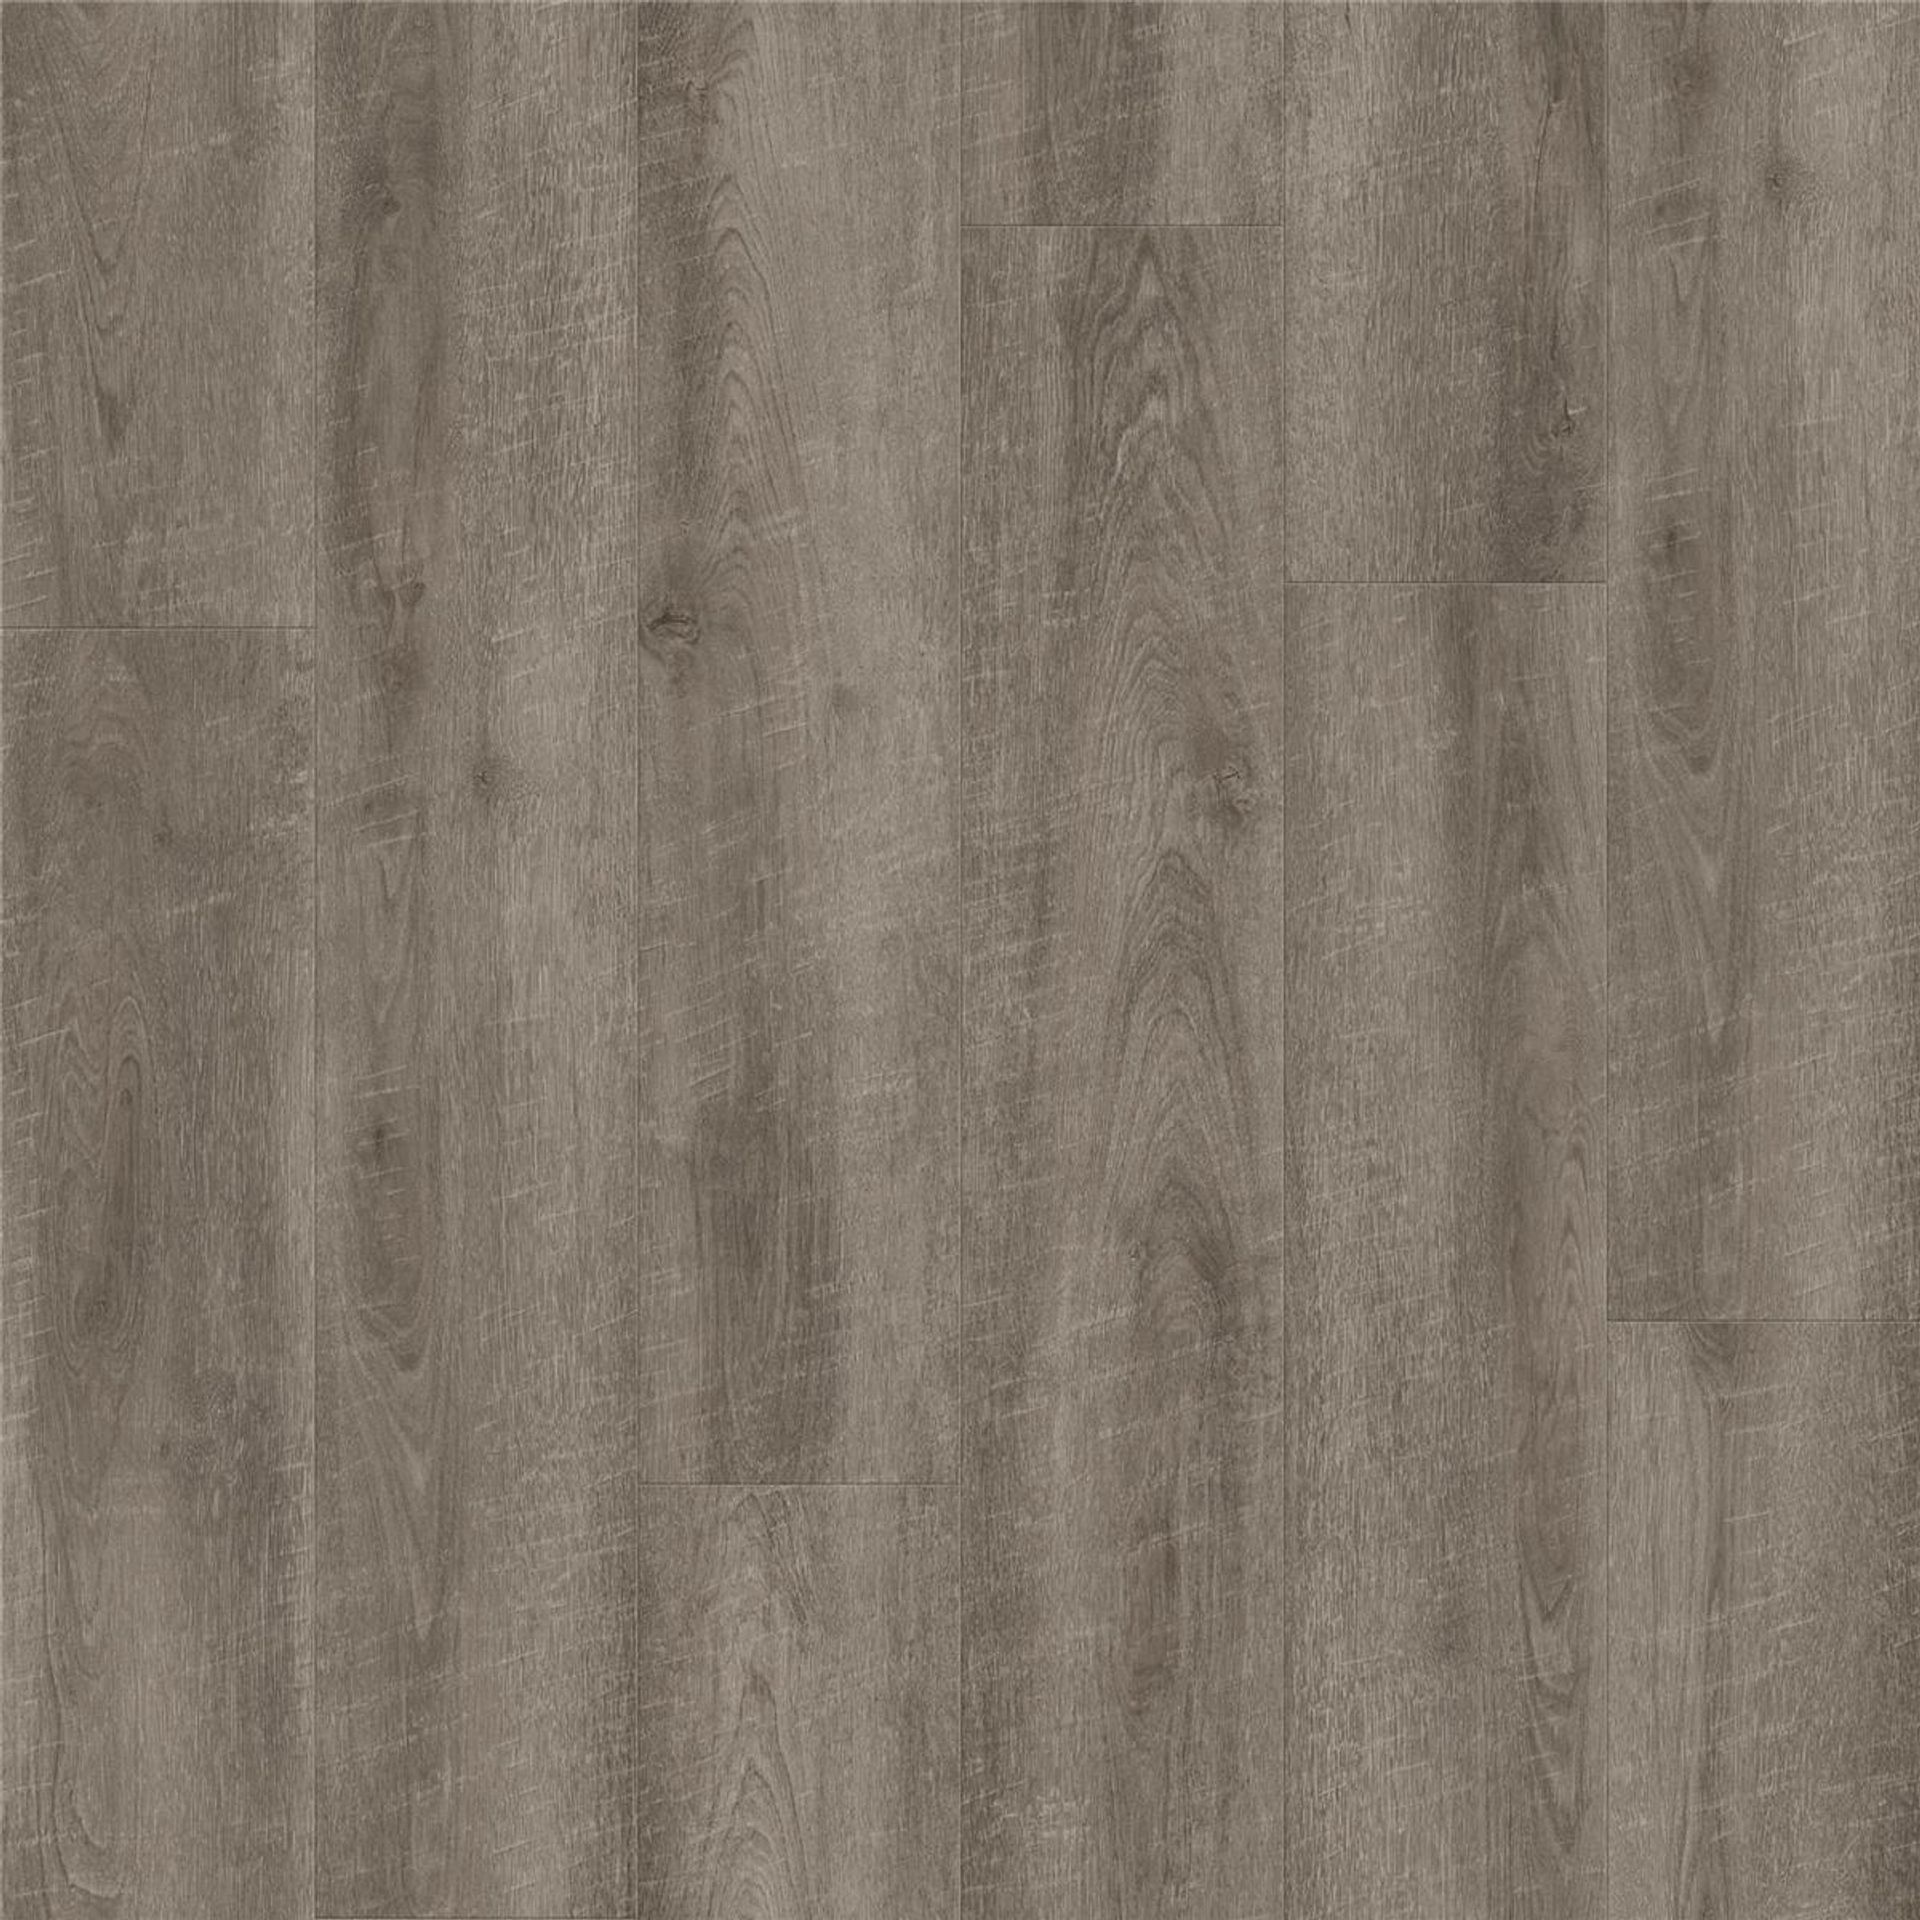 Designboden CLASSICS-Antik Oak-Dark grey Planke 121,1 cm x 19,05 cm - Nutzschichtdicke 0,55 mm